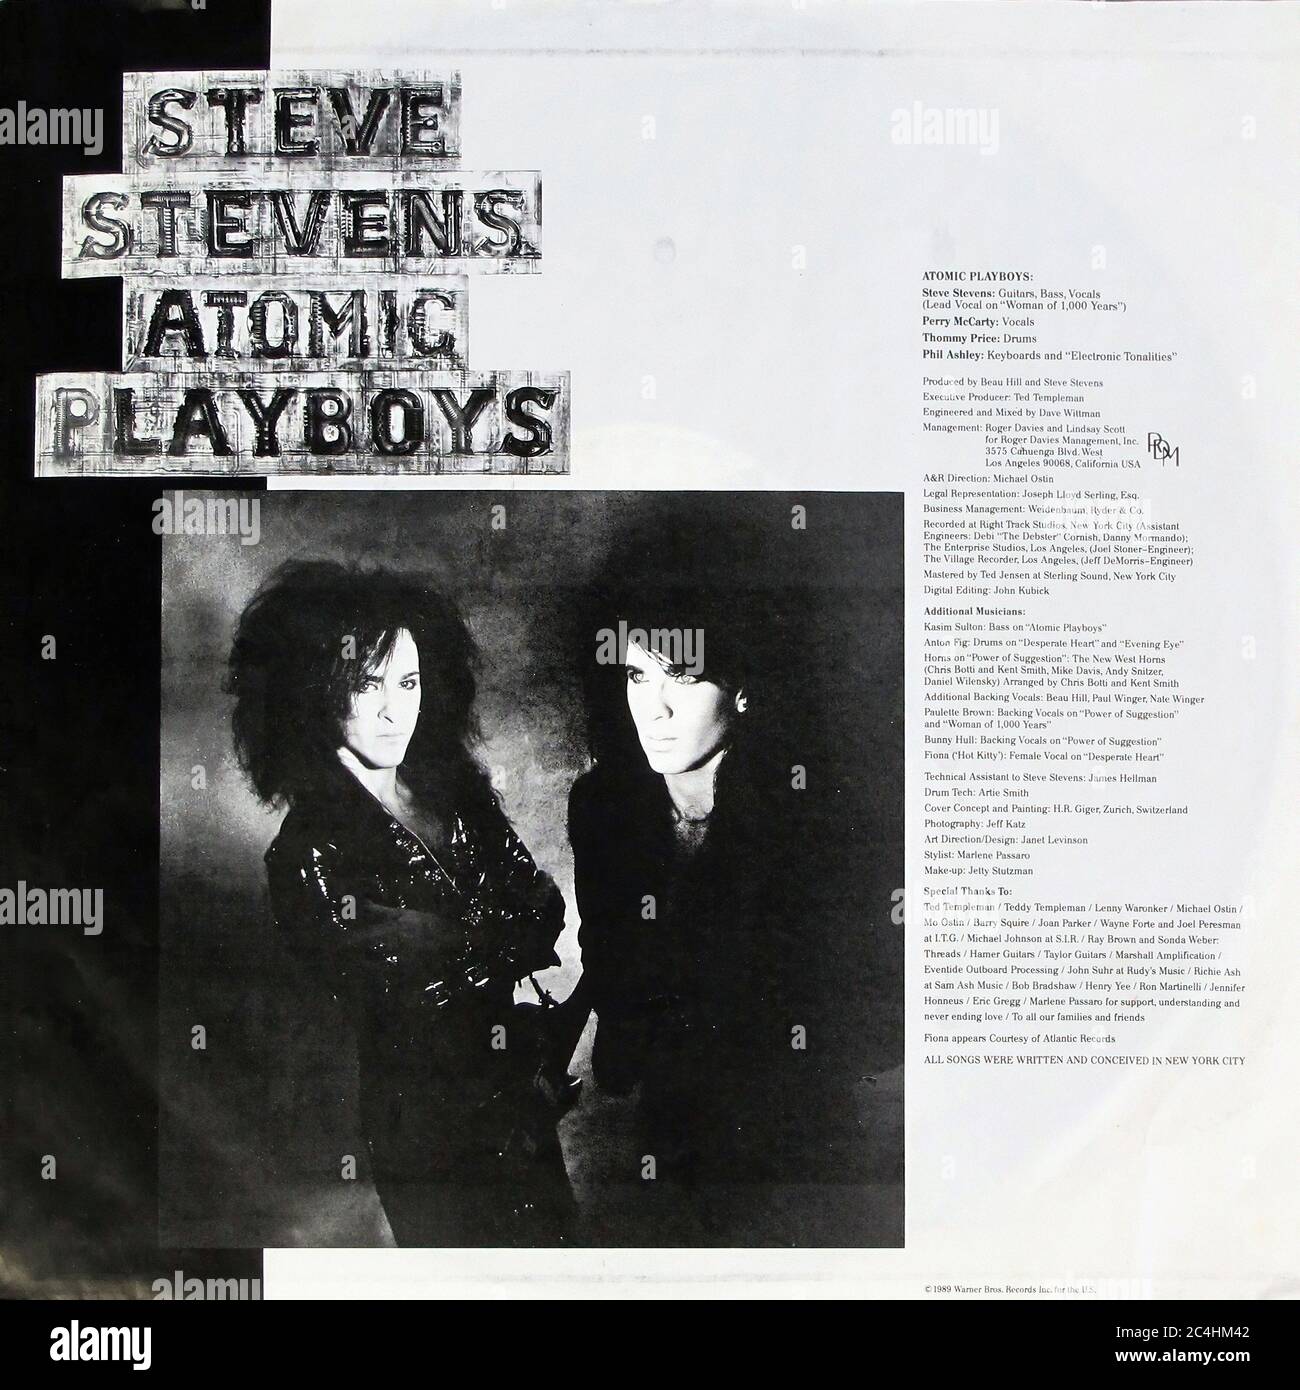 Steve Stevens Atomic Playboy HR Giger Billy Idol 12'' Vinyl LP - vintage Record cover 02 Foto Stock